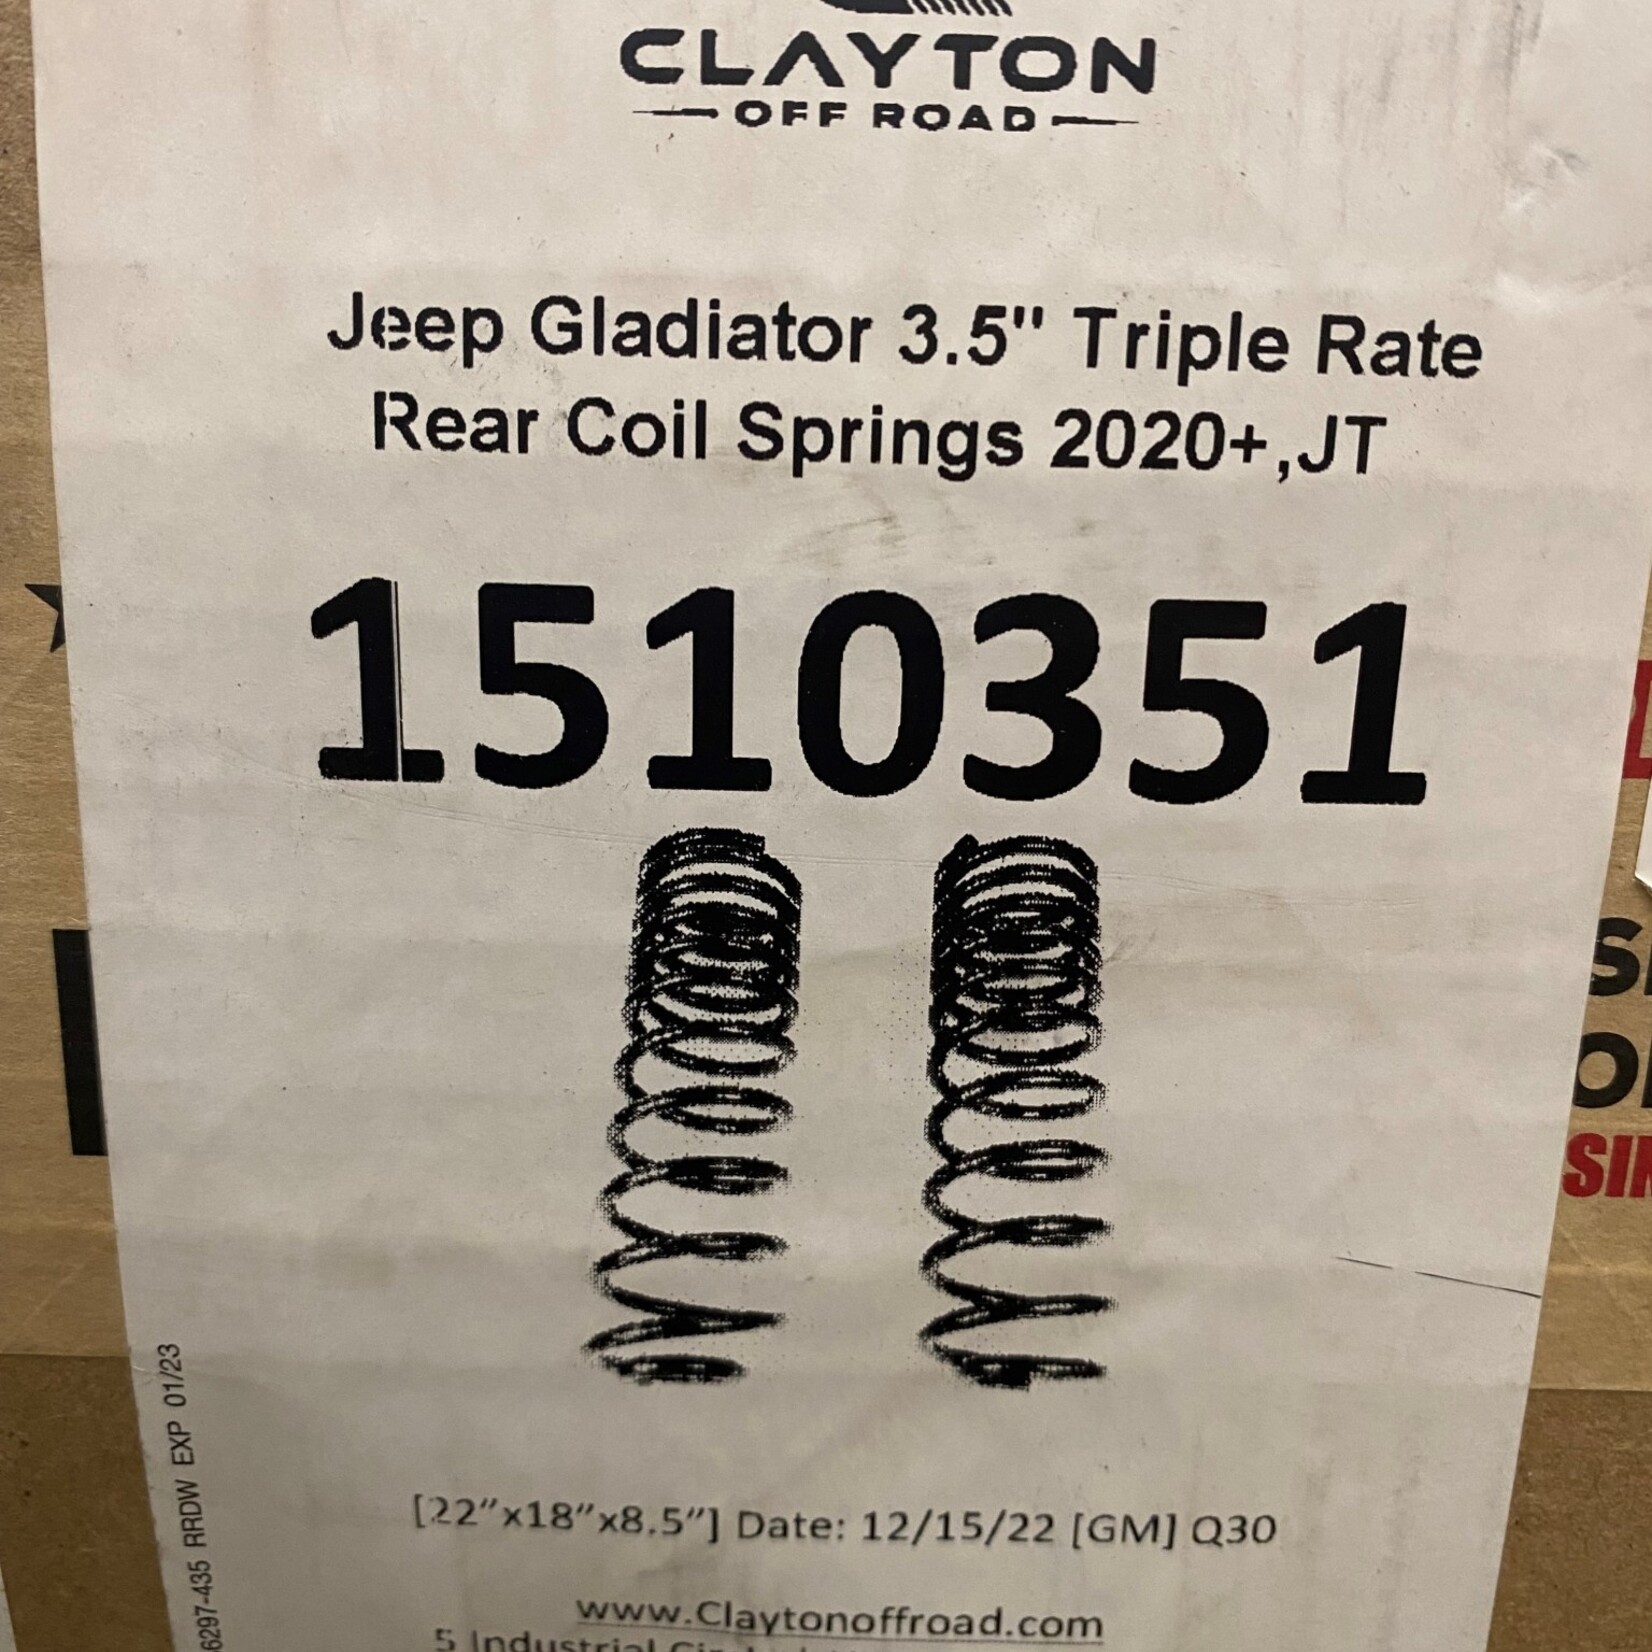 CLAYTON CLAYTON TRIPLE RATE REAR COIL SPRINGS 3.5" 2020+ GLADIATOR JT DIESEL